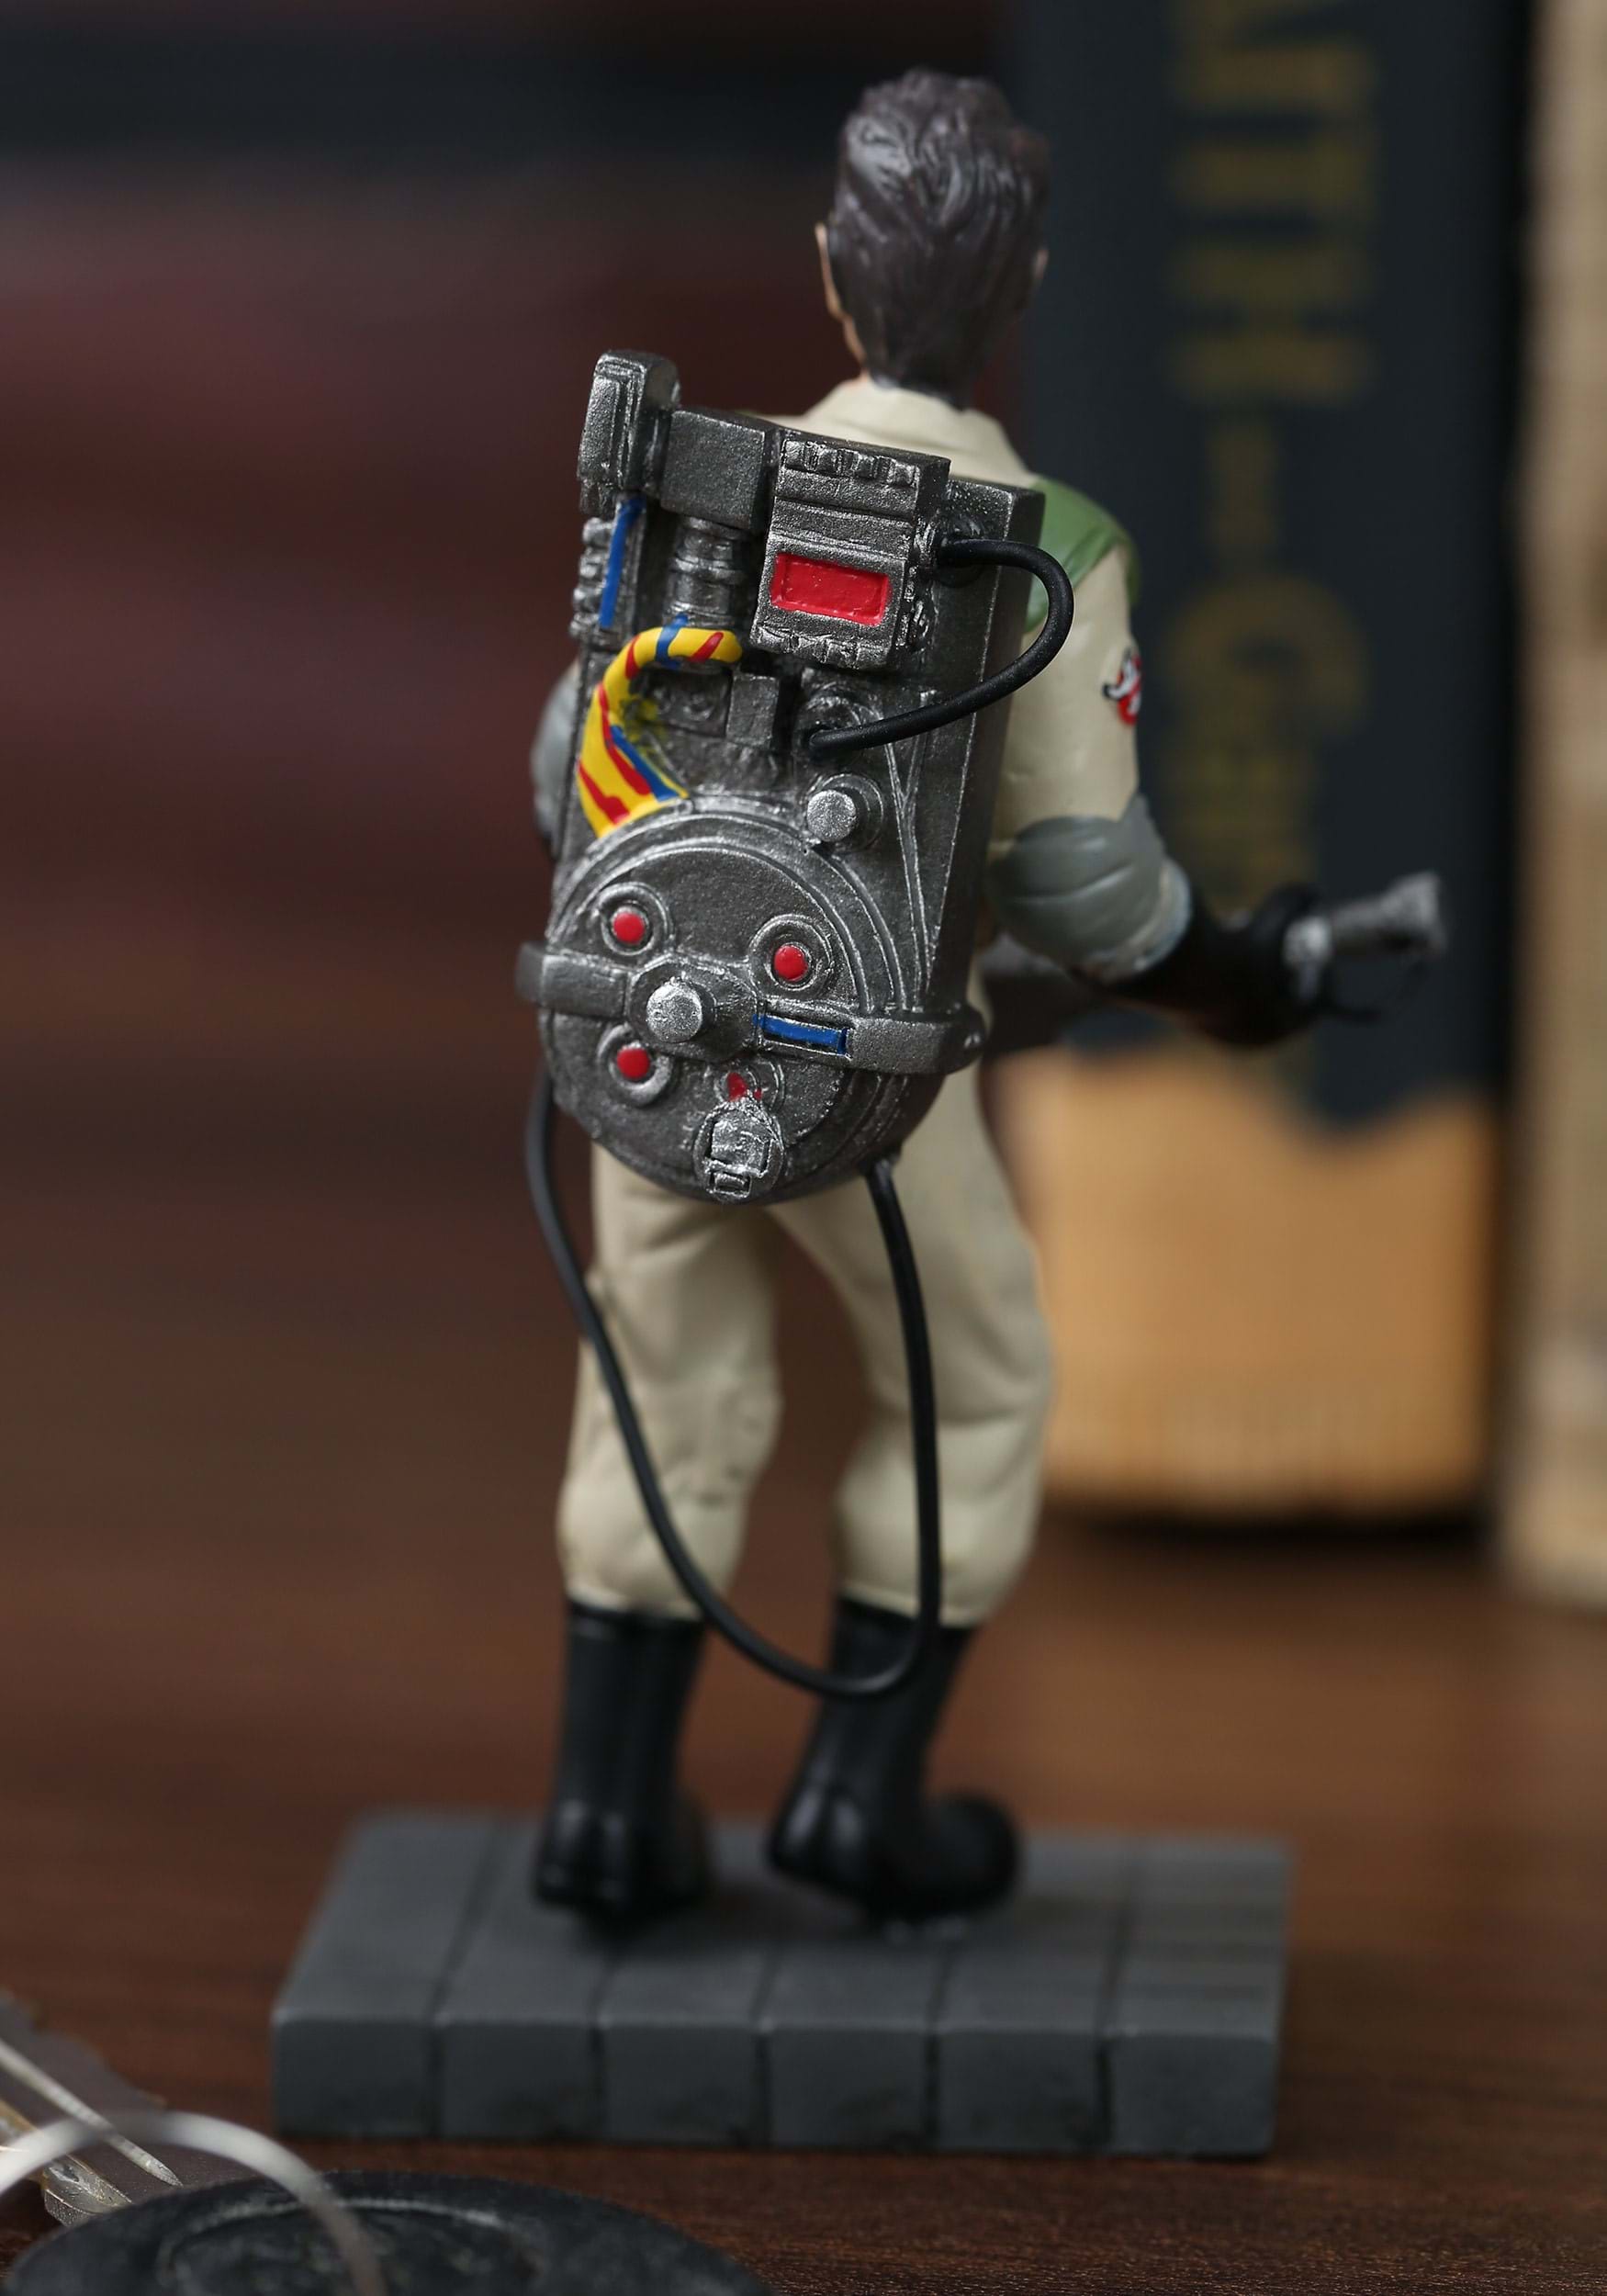 Department 56 Ghostbusters Dr. Egon Spengler Figurine